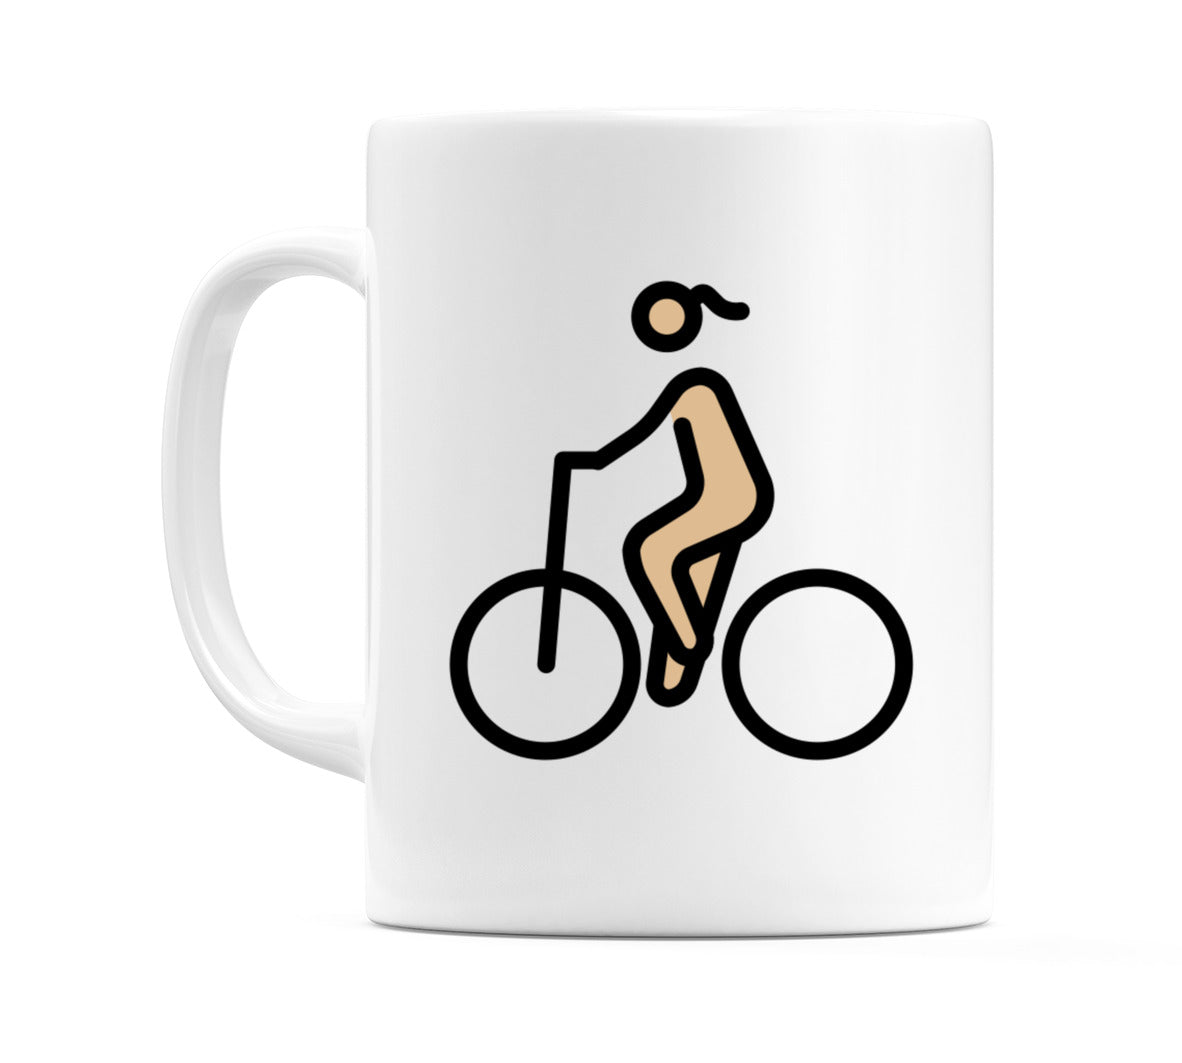 Female Biking: Medium-Light Skin Tone Emoji Mug